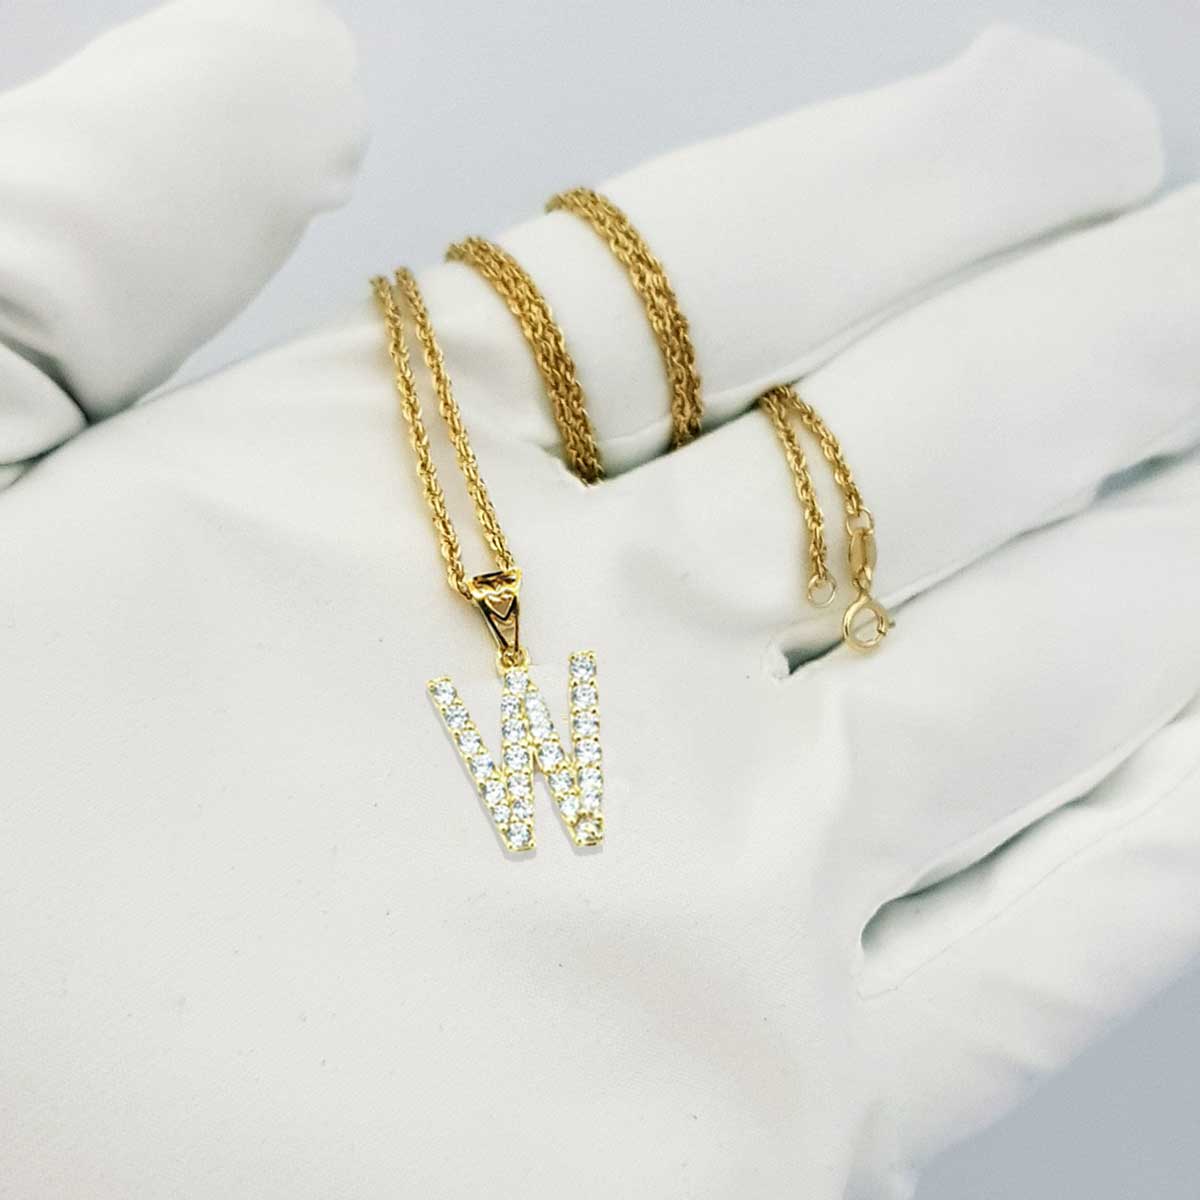 18K Pure Gold Letter W Design w/ Zircon Stone Necklace